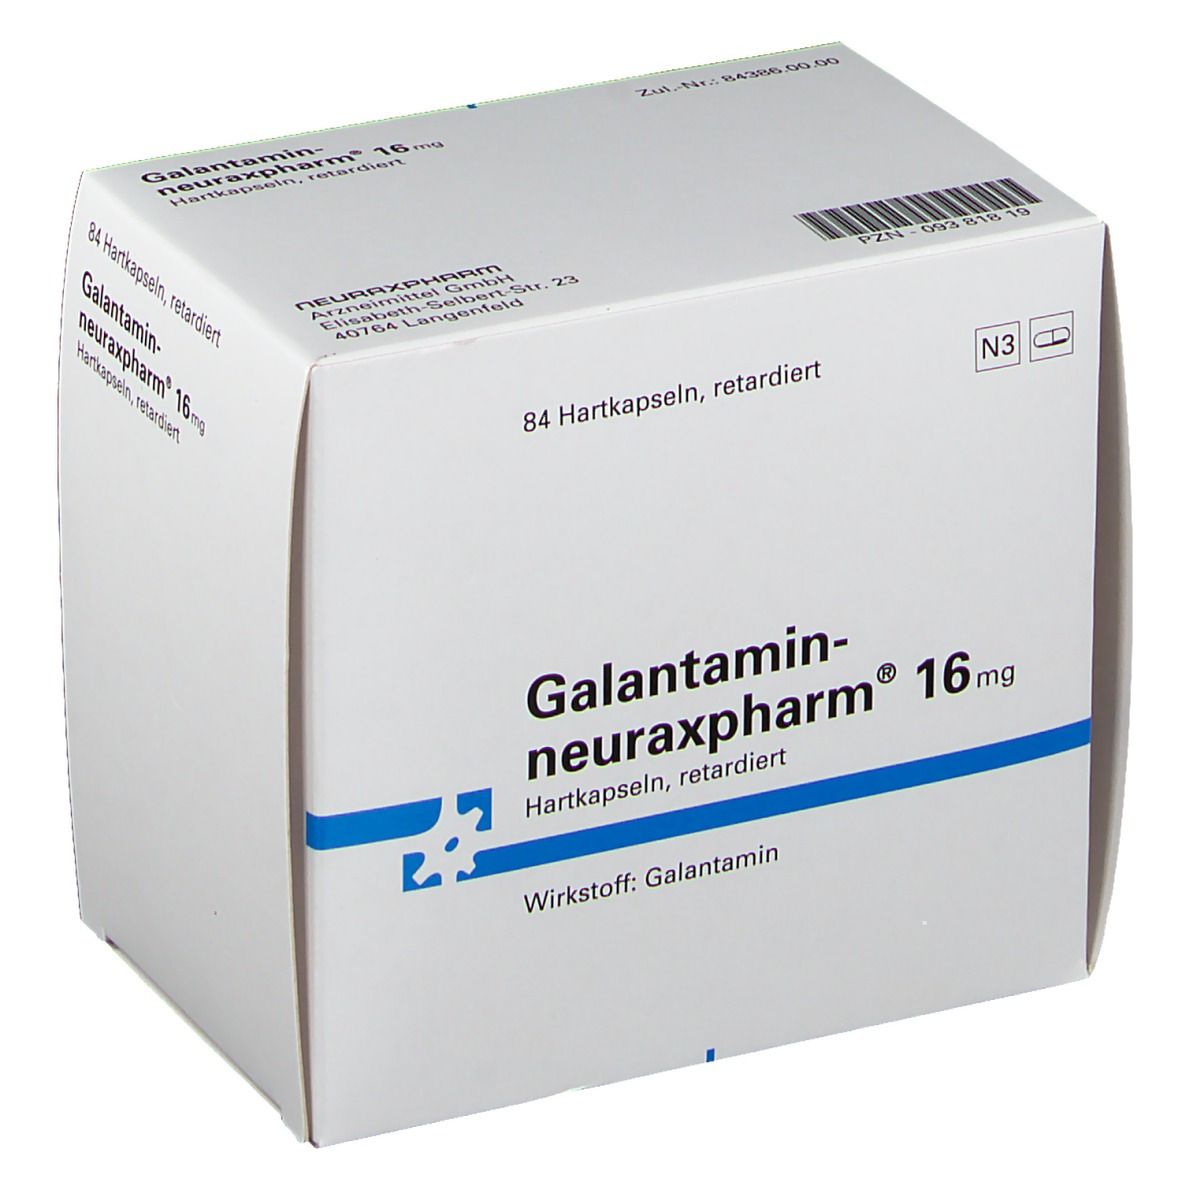 Galantamin-neuraxpharm® 16 mg